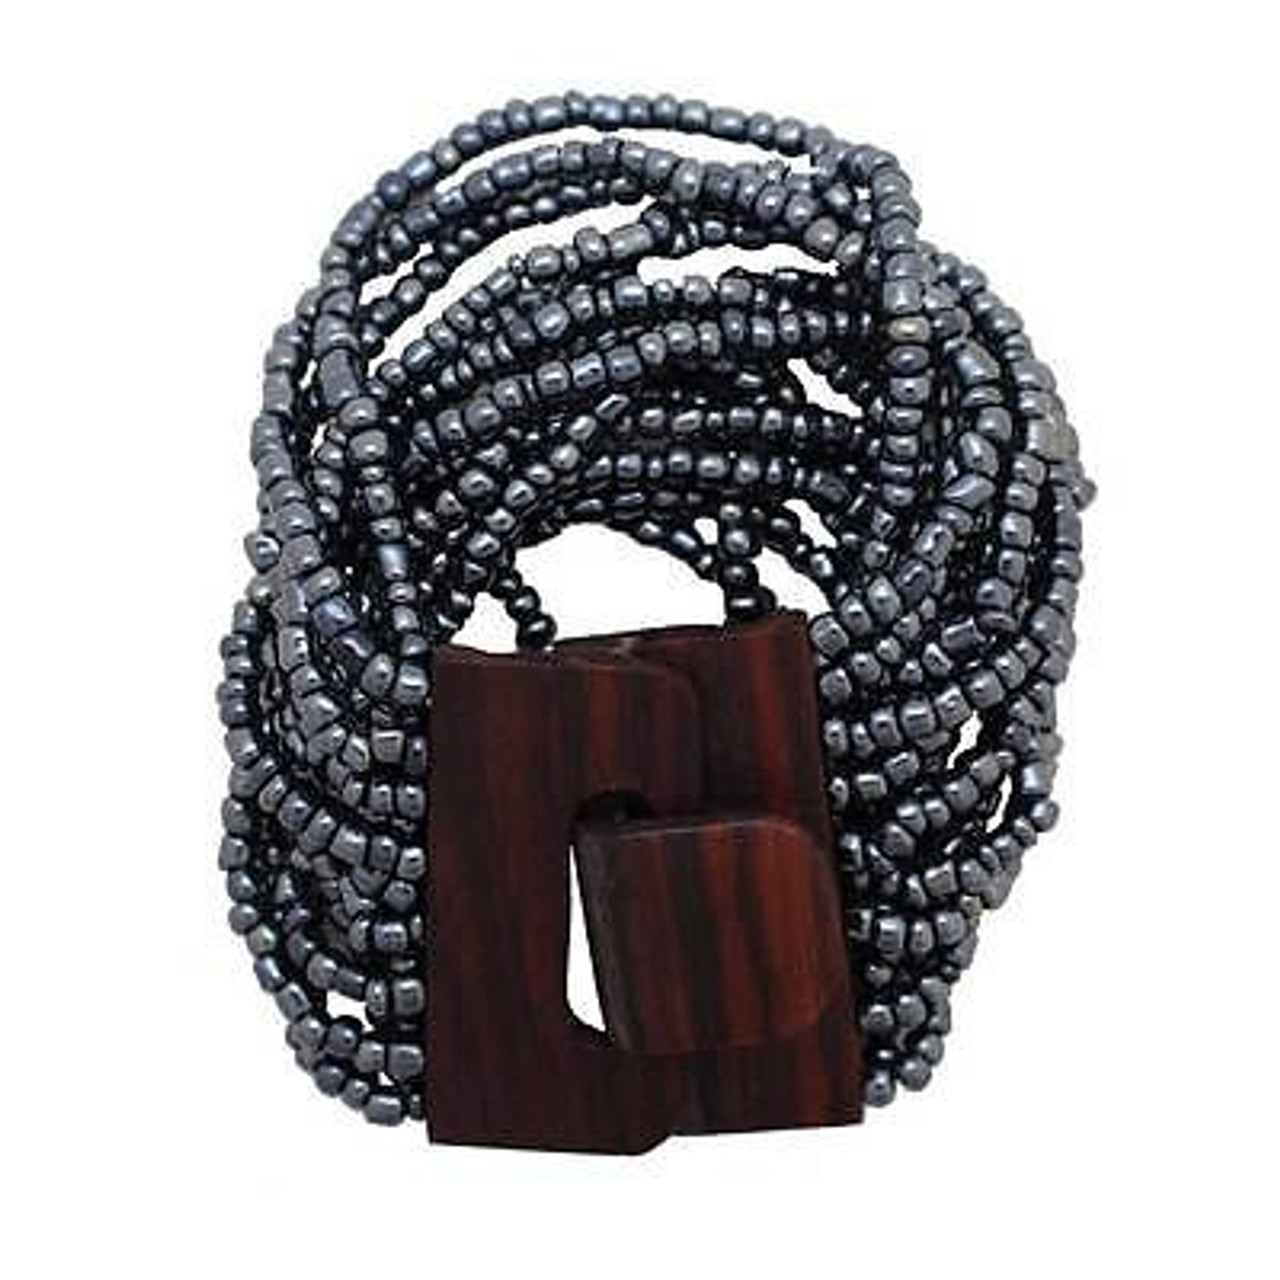 Costume Jewelry: Purple Bead Bracelet, String